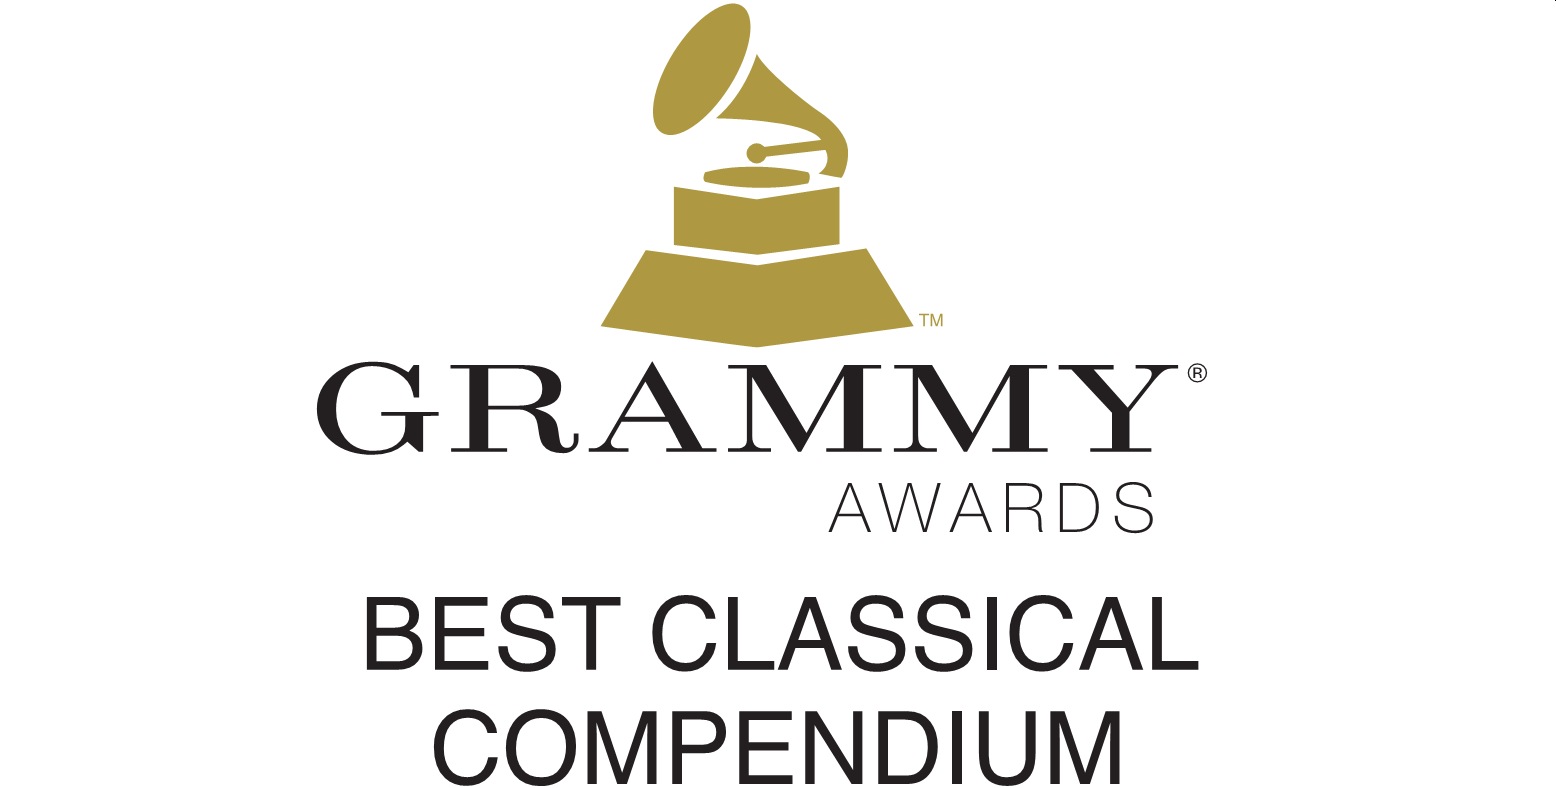 Grammy Award: 'Best Classical Compendium' (2013)